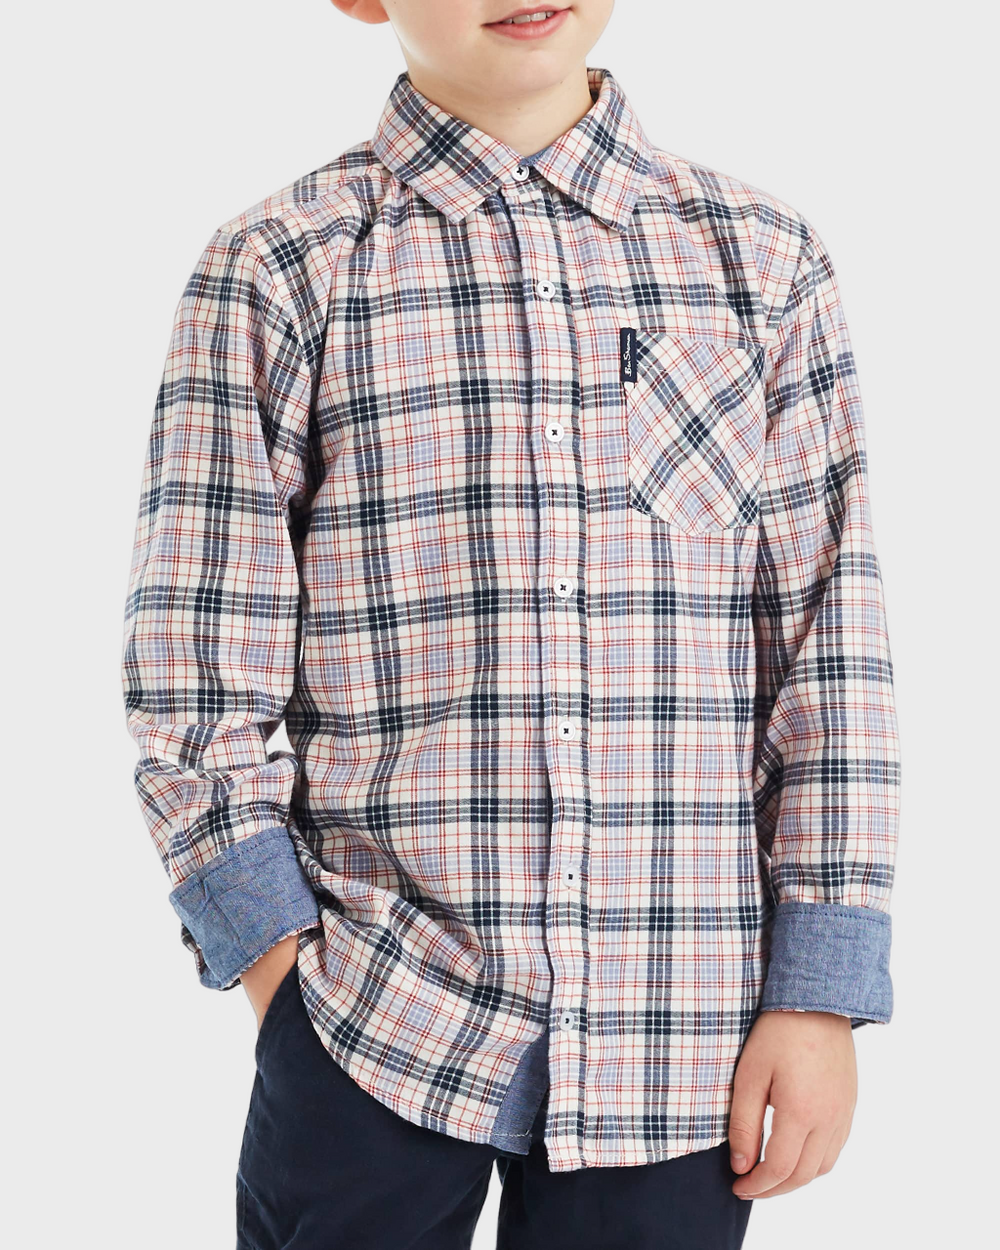 Boys Plaid Button-Down Shirt (Sizes 8-18)